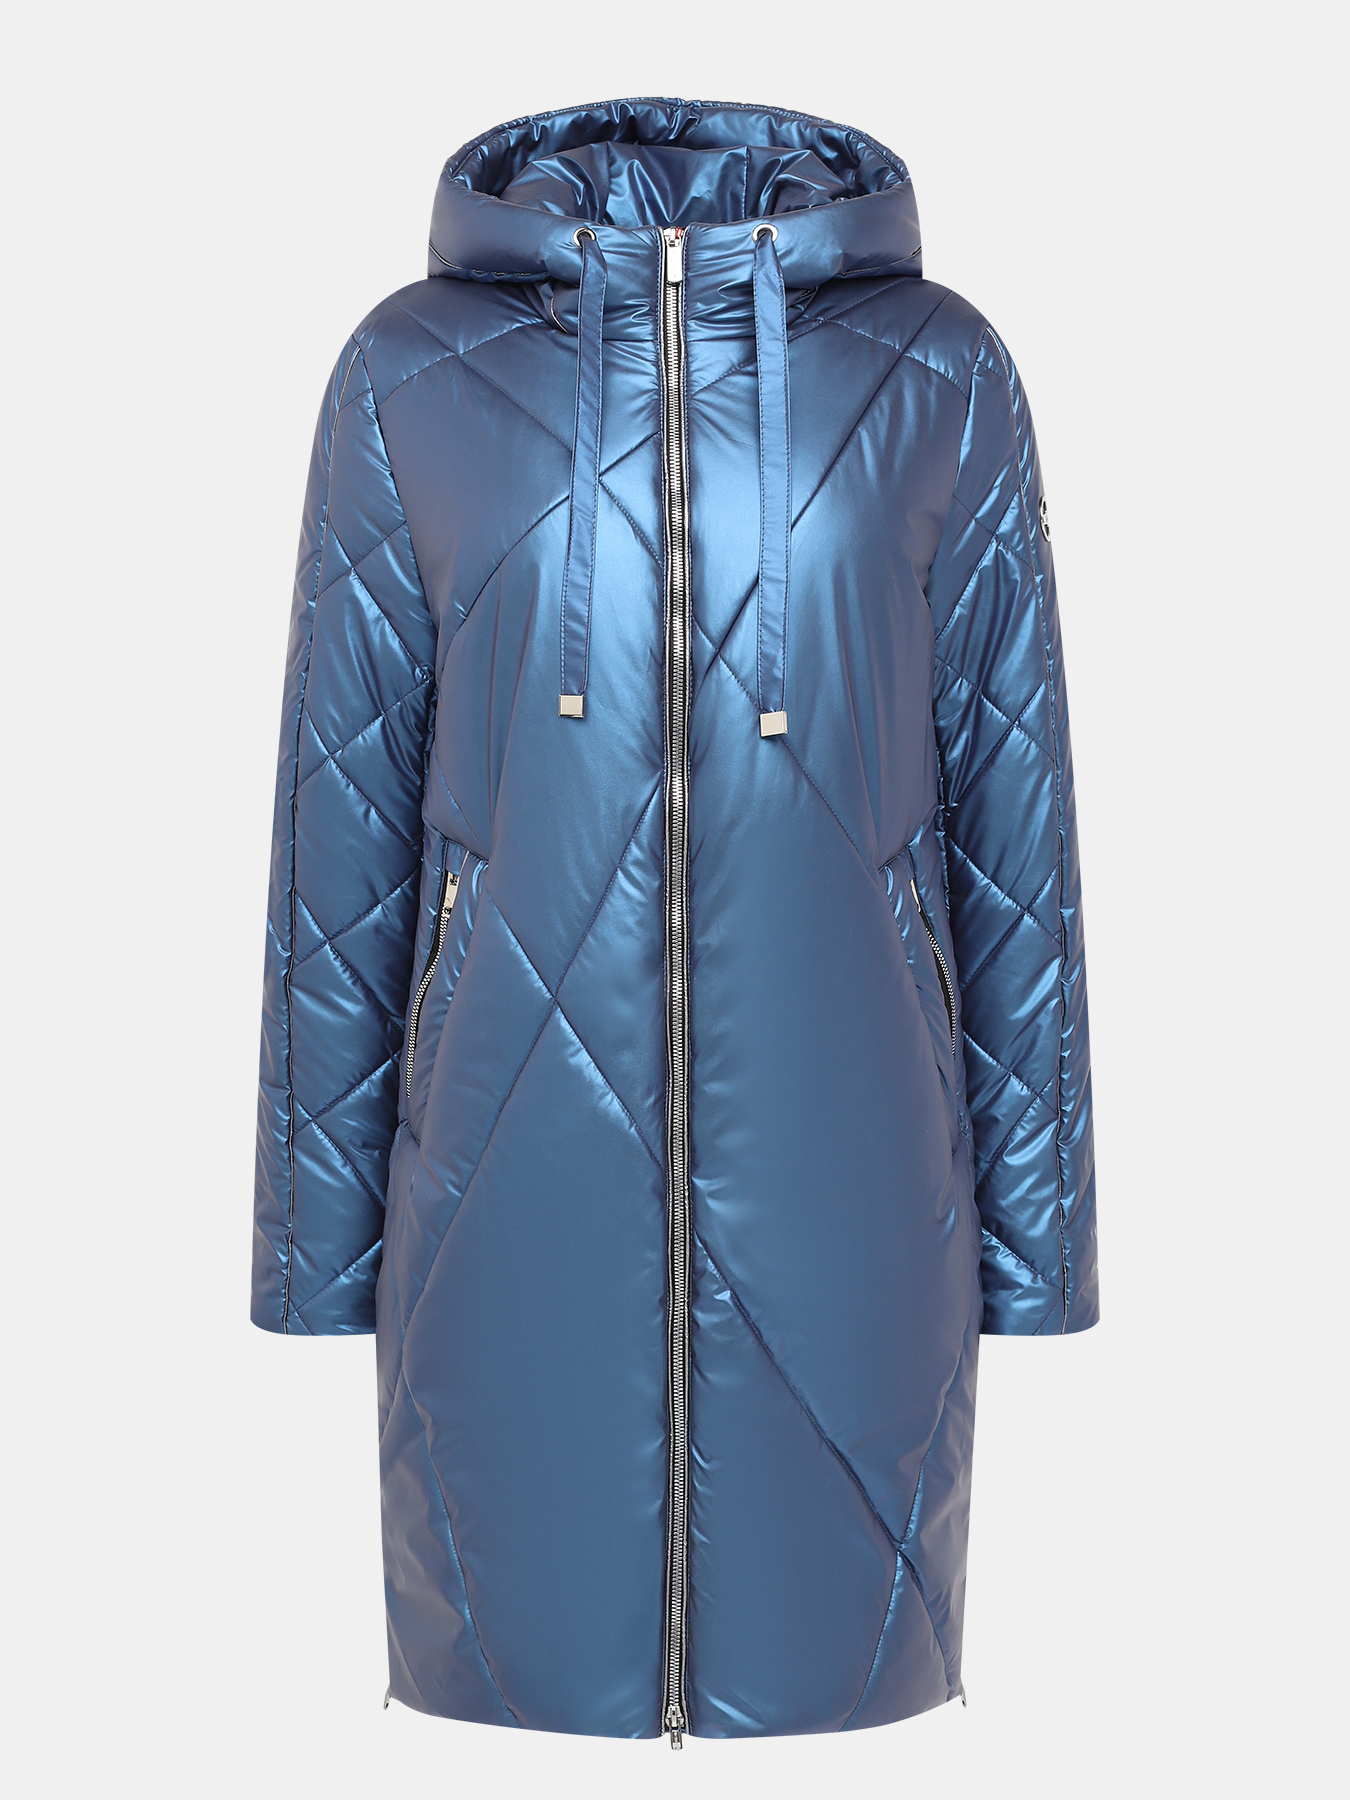 Пальто зимнее Maritta 433572-025, цвет синий, размер 48 - фото 1